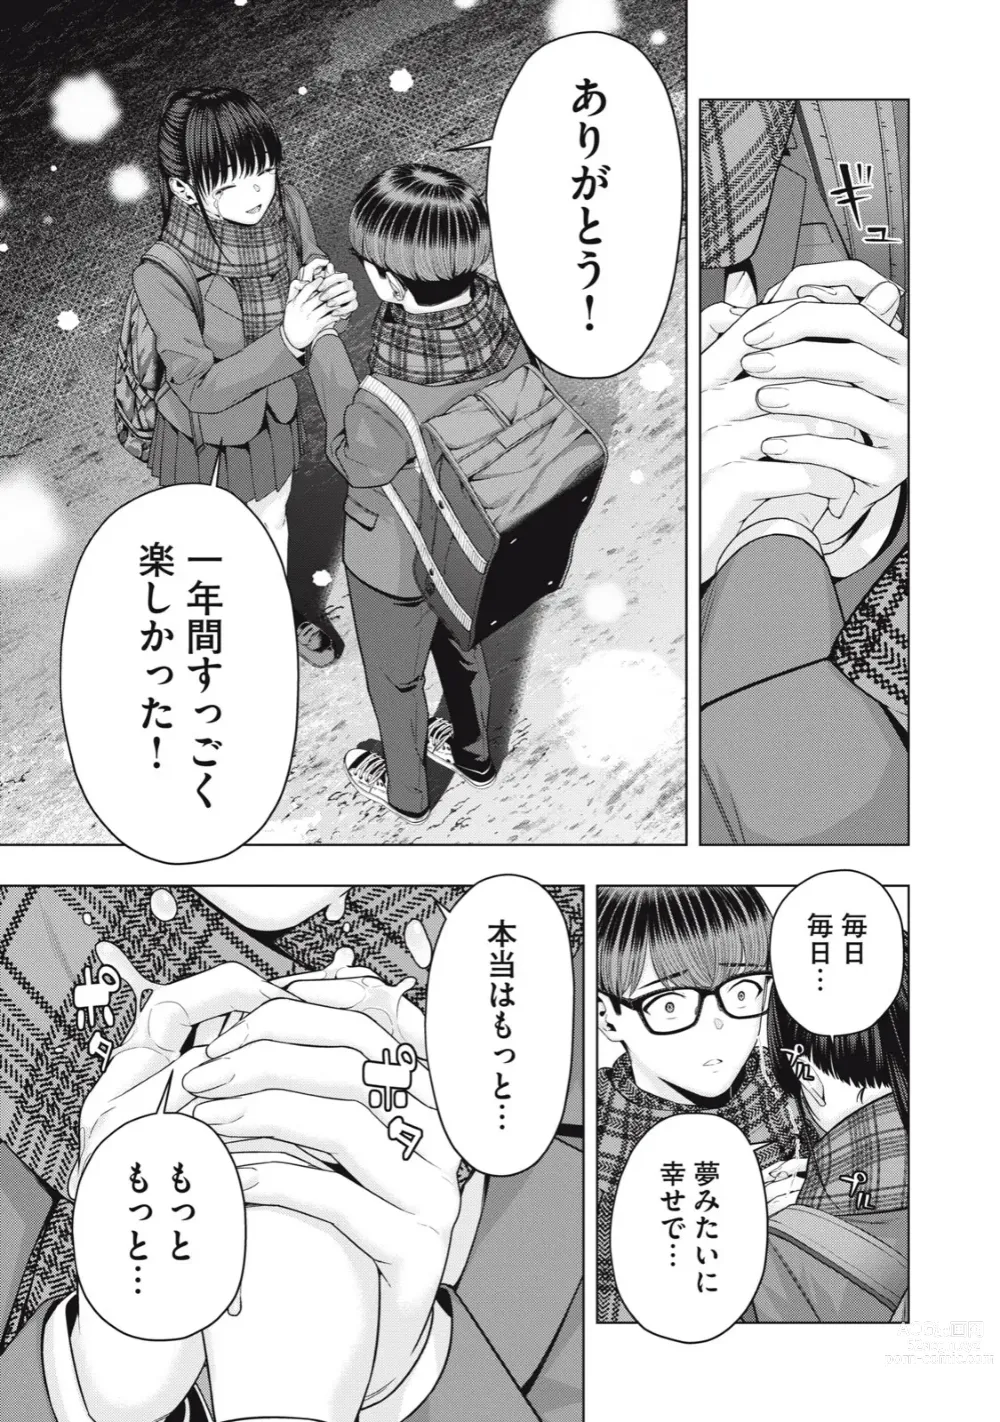 Page 583 of manga Kanojo no Tomodachi